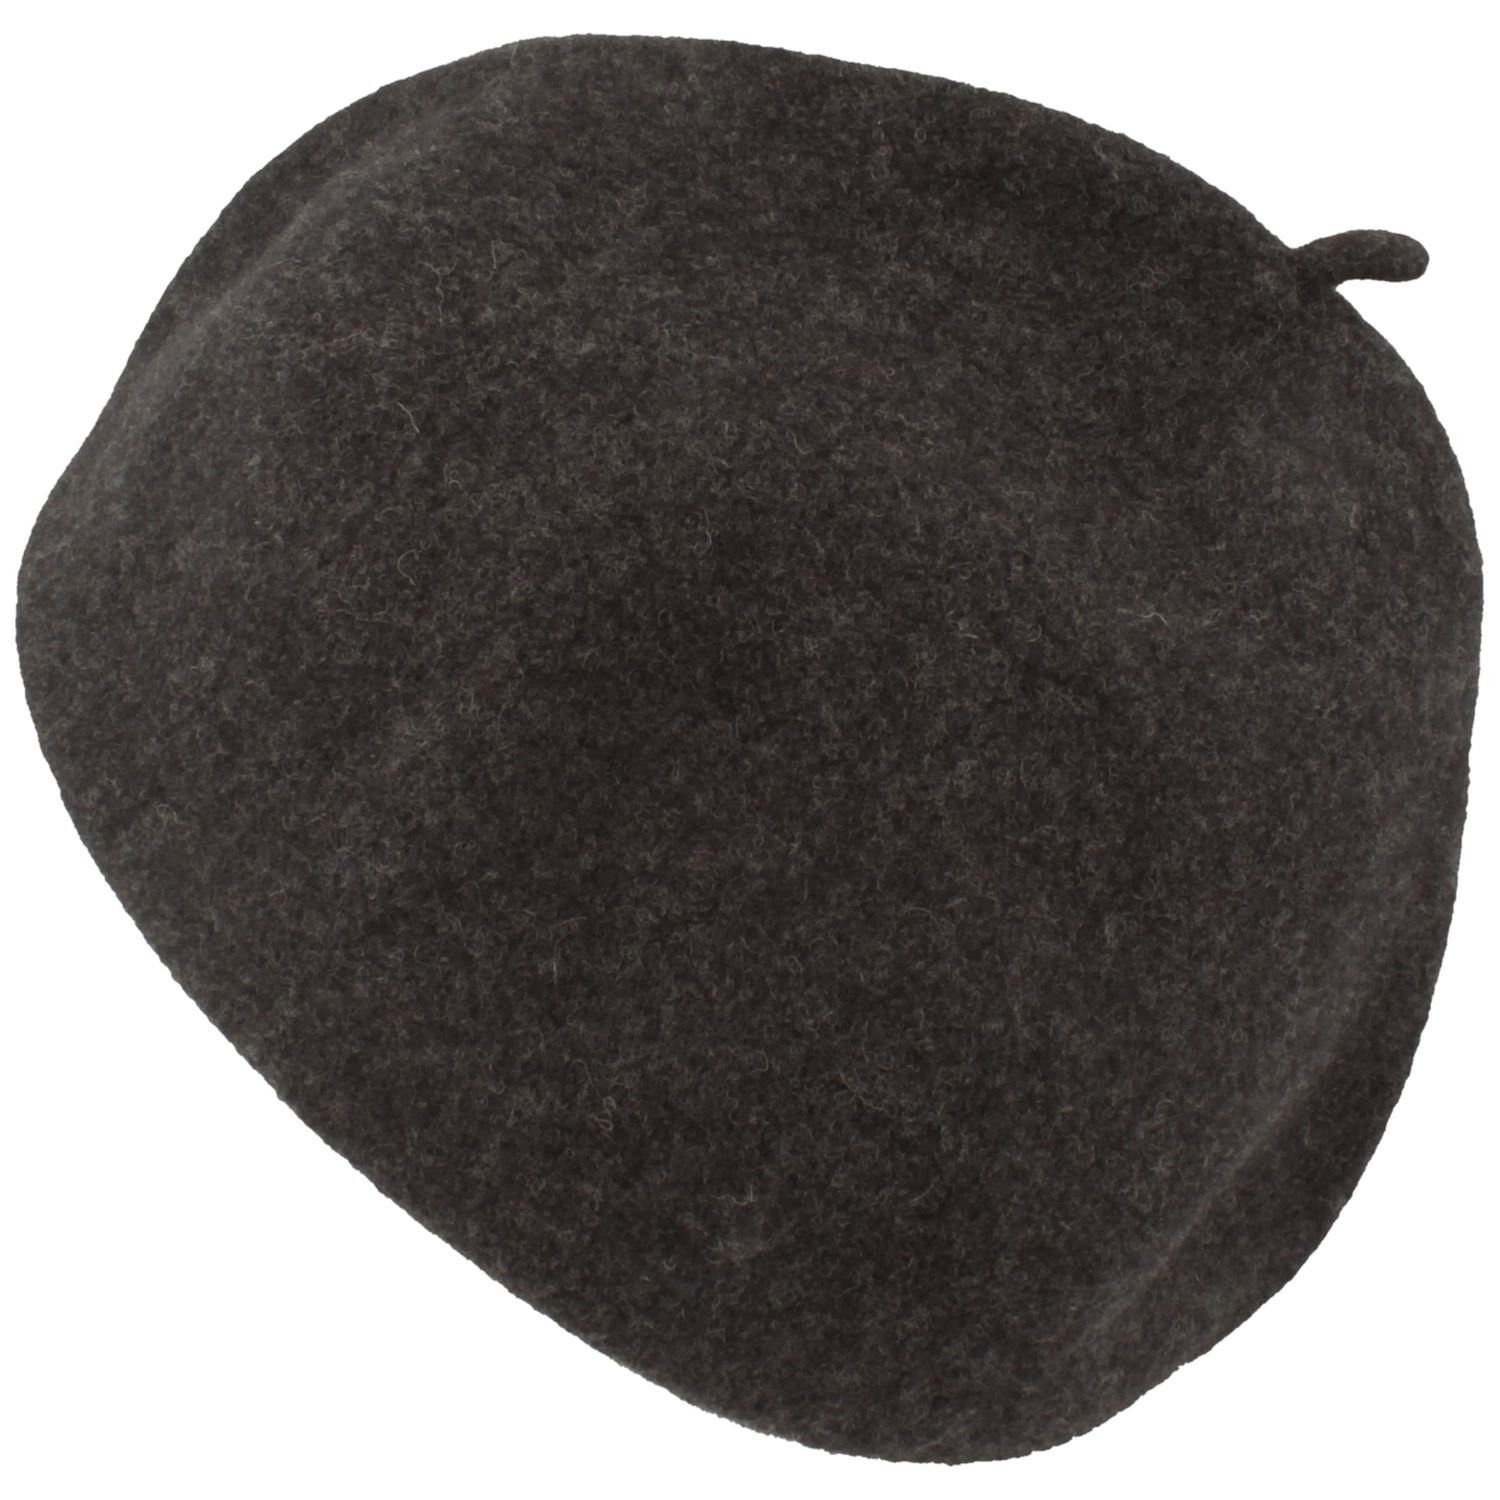 Kopka Baskenmütze Long Beanie Stegbaske aus 100% Wolle schwarz-meliert Walkmütze